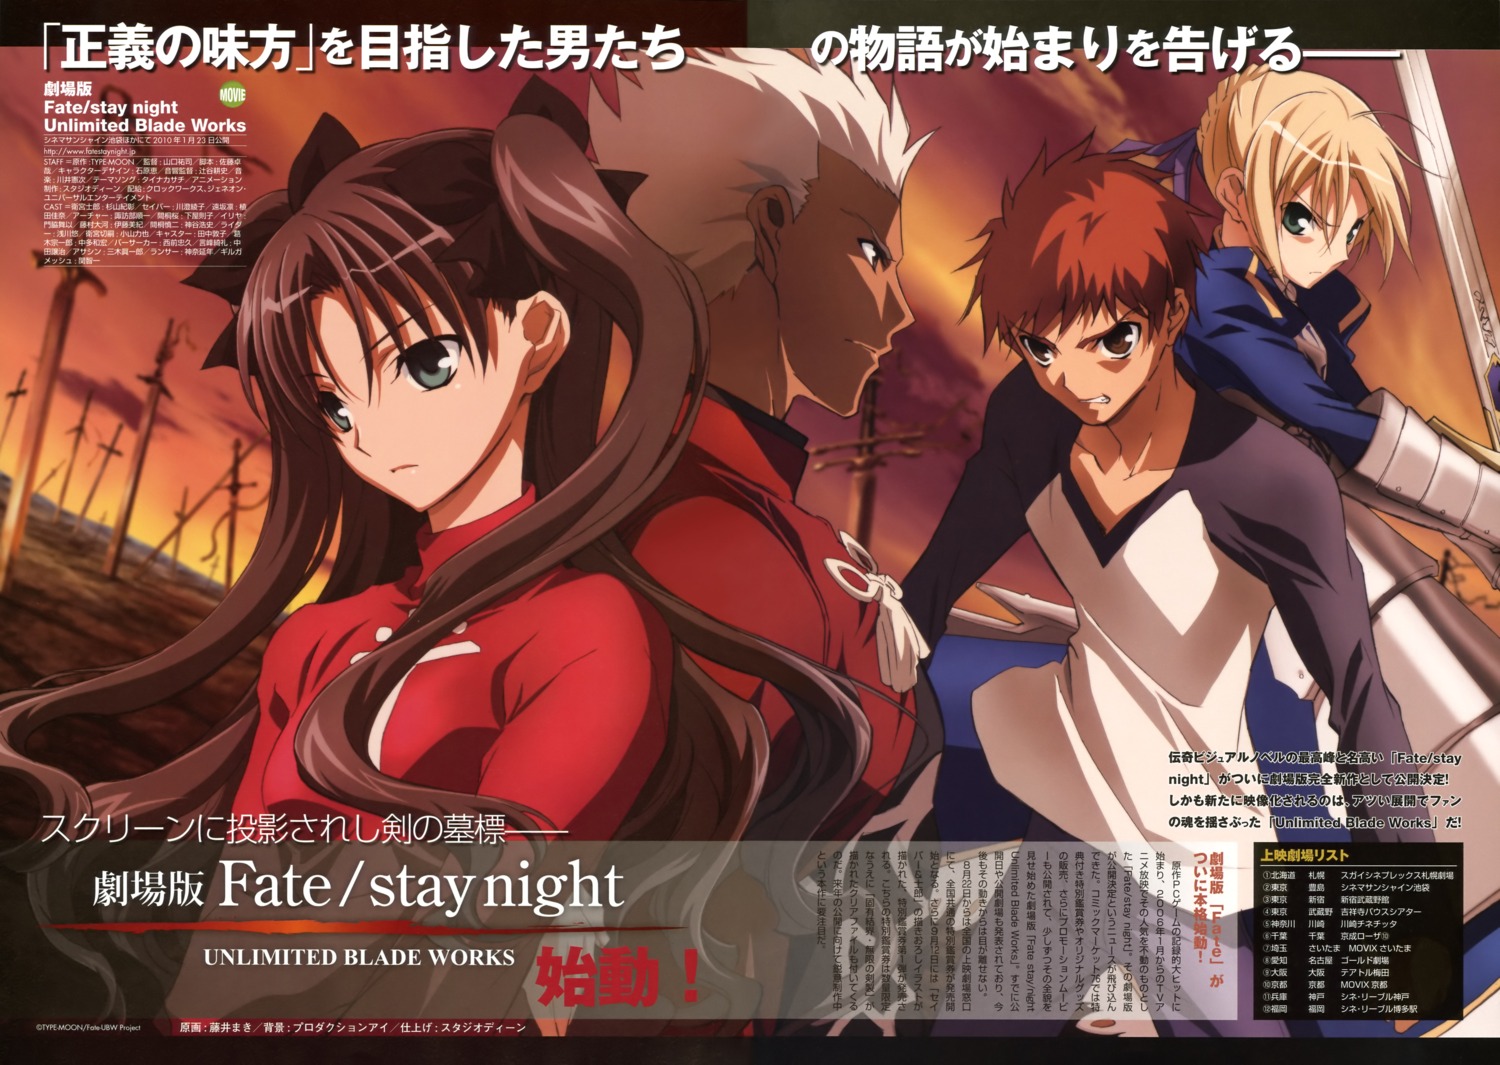 Fujii Maki Fate Stay Night Fate Stay Night Unlimited Blade Works Archer Emiya Shirou Saber Toosaka Rin Yande Re